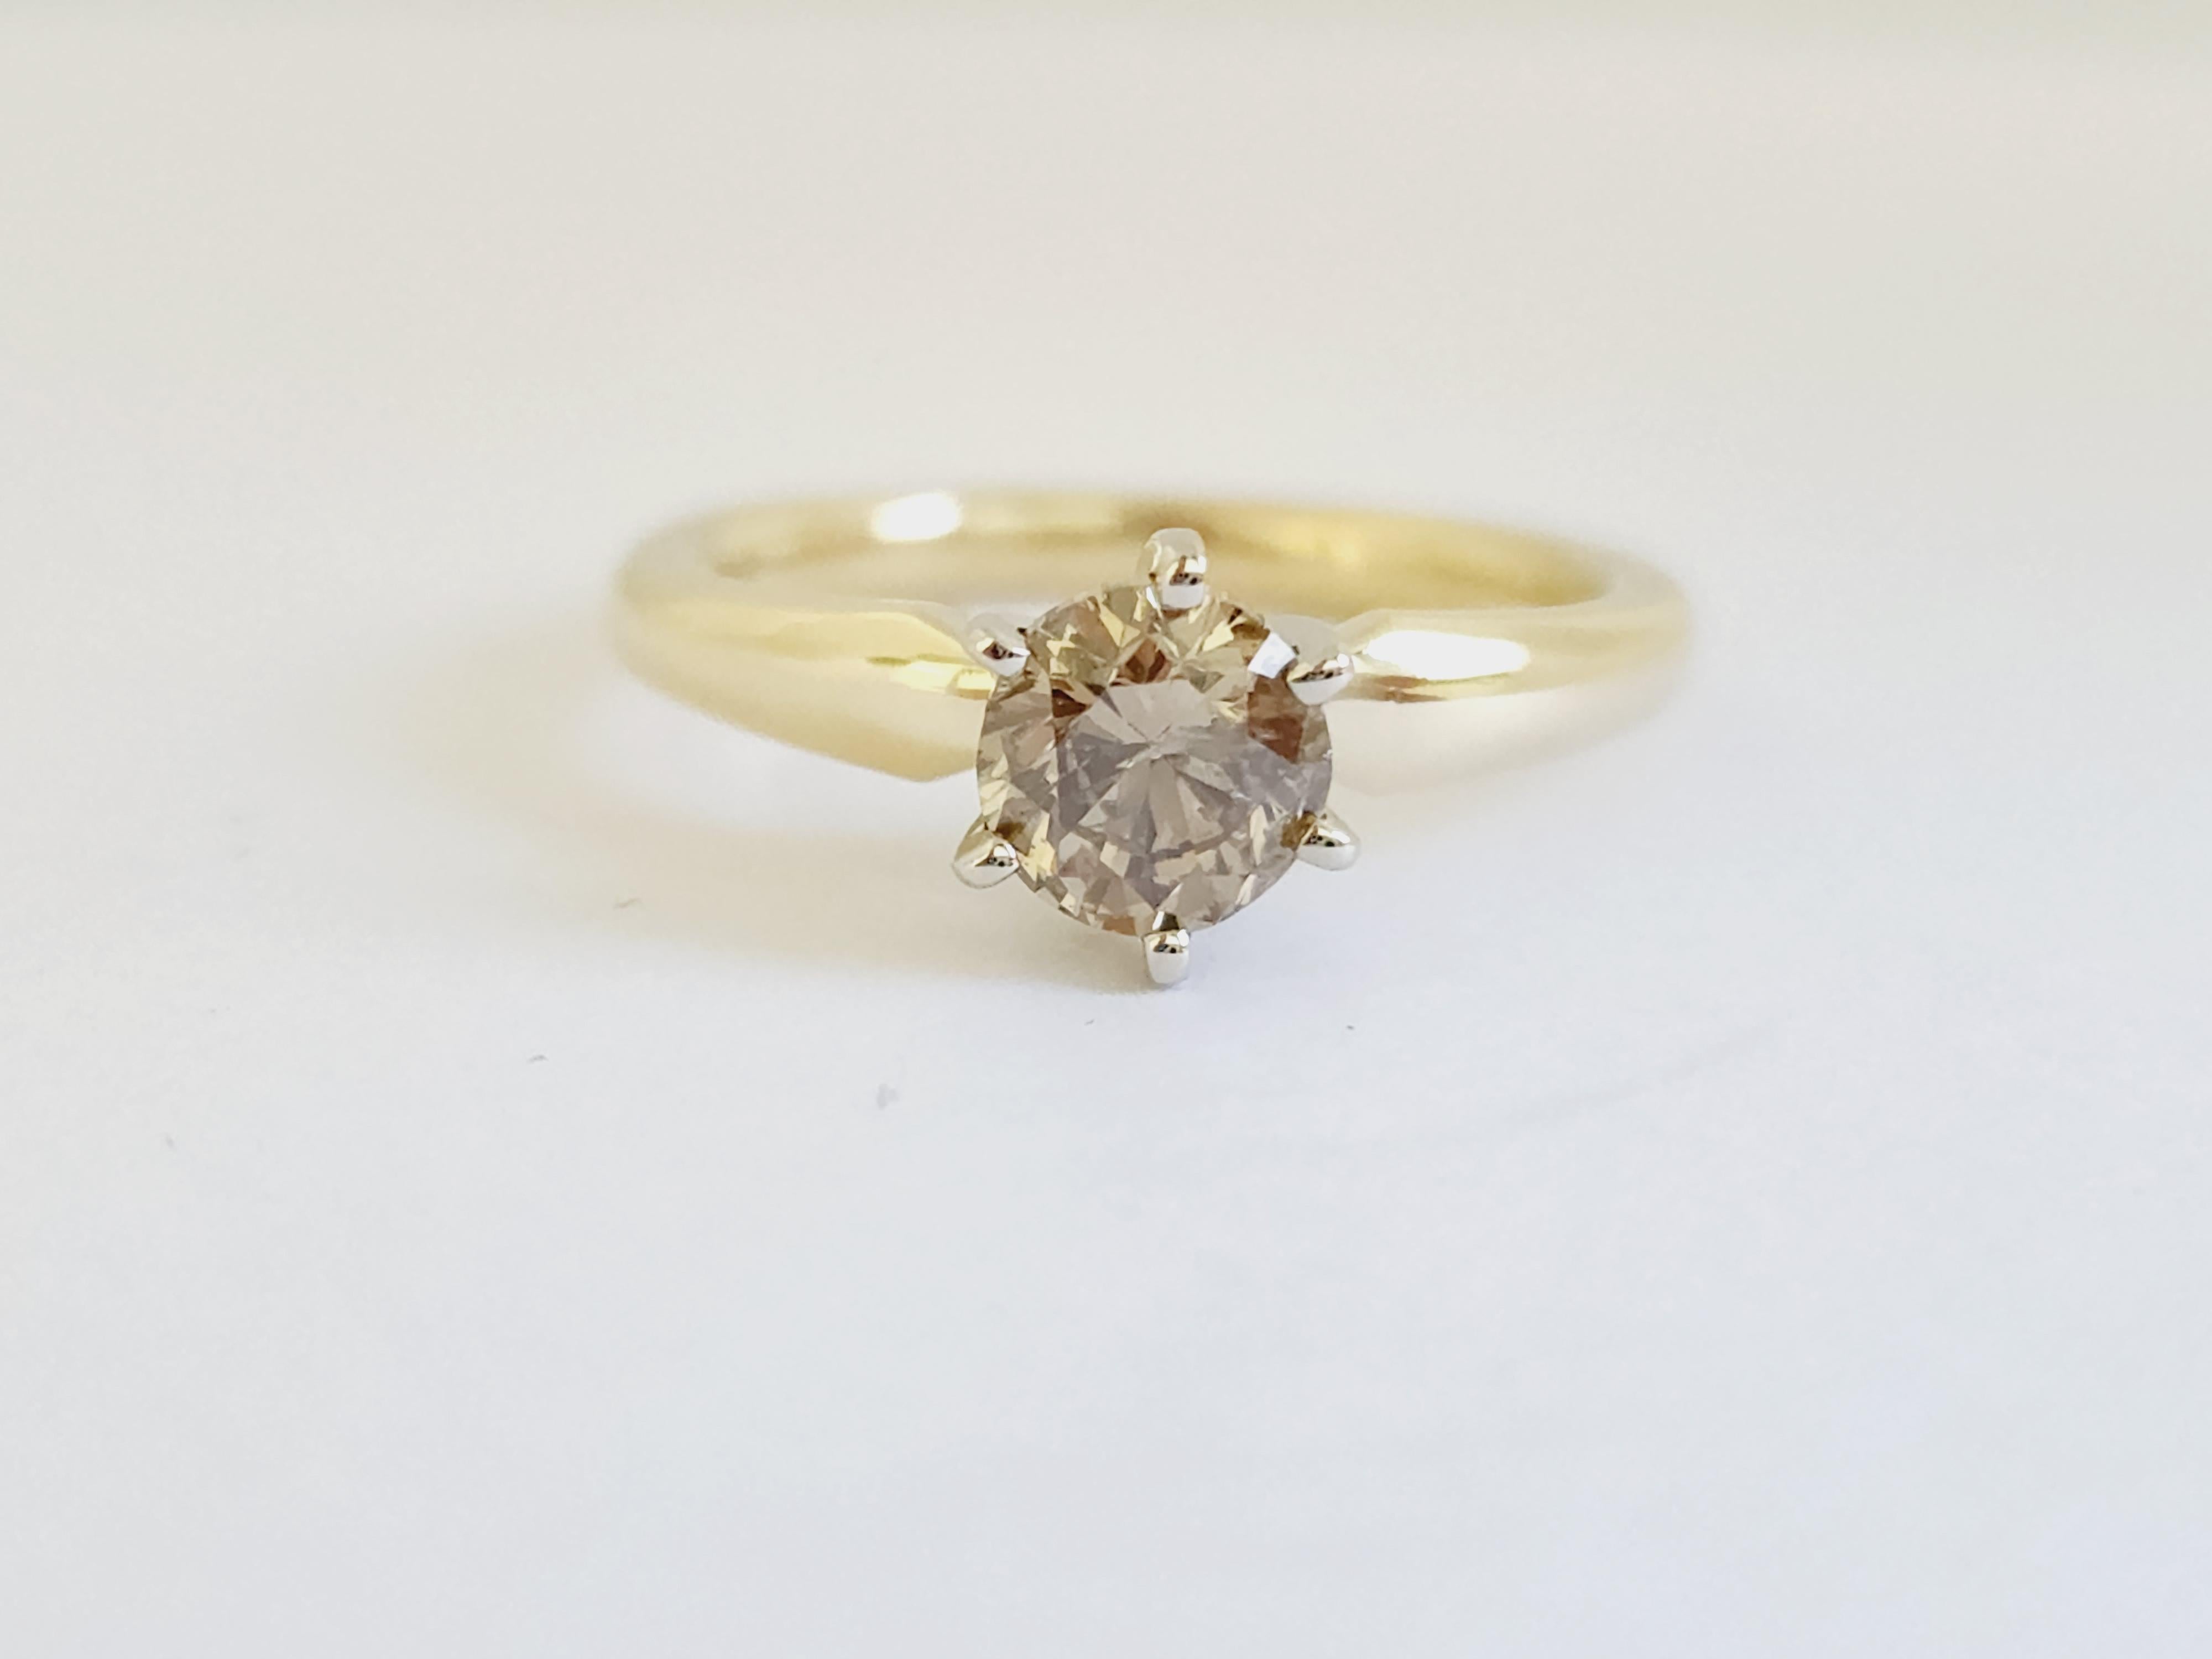 Natural fancy dark yellow brown round diamond weighing 1 carats. Set on 6-prong 14K yellow gold.
Ring size: 6.5